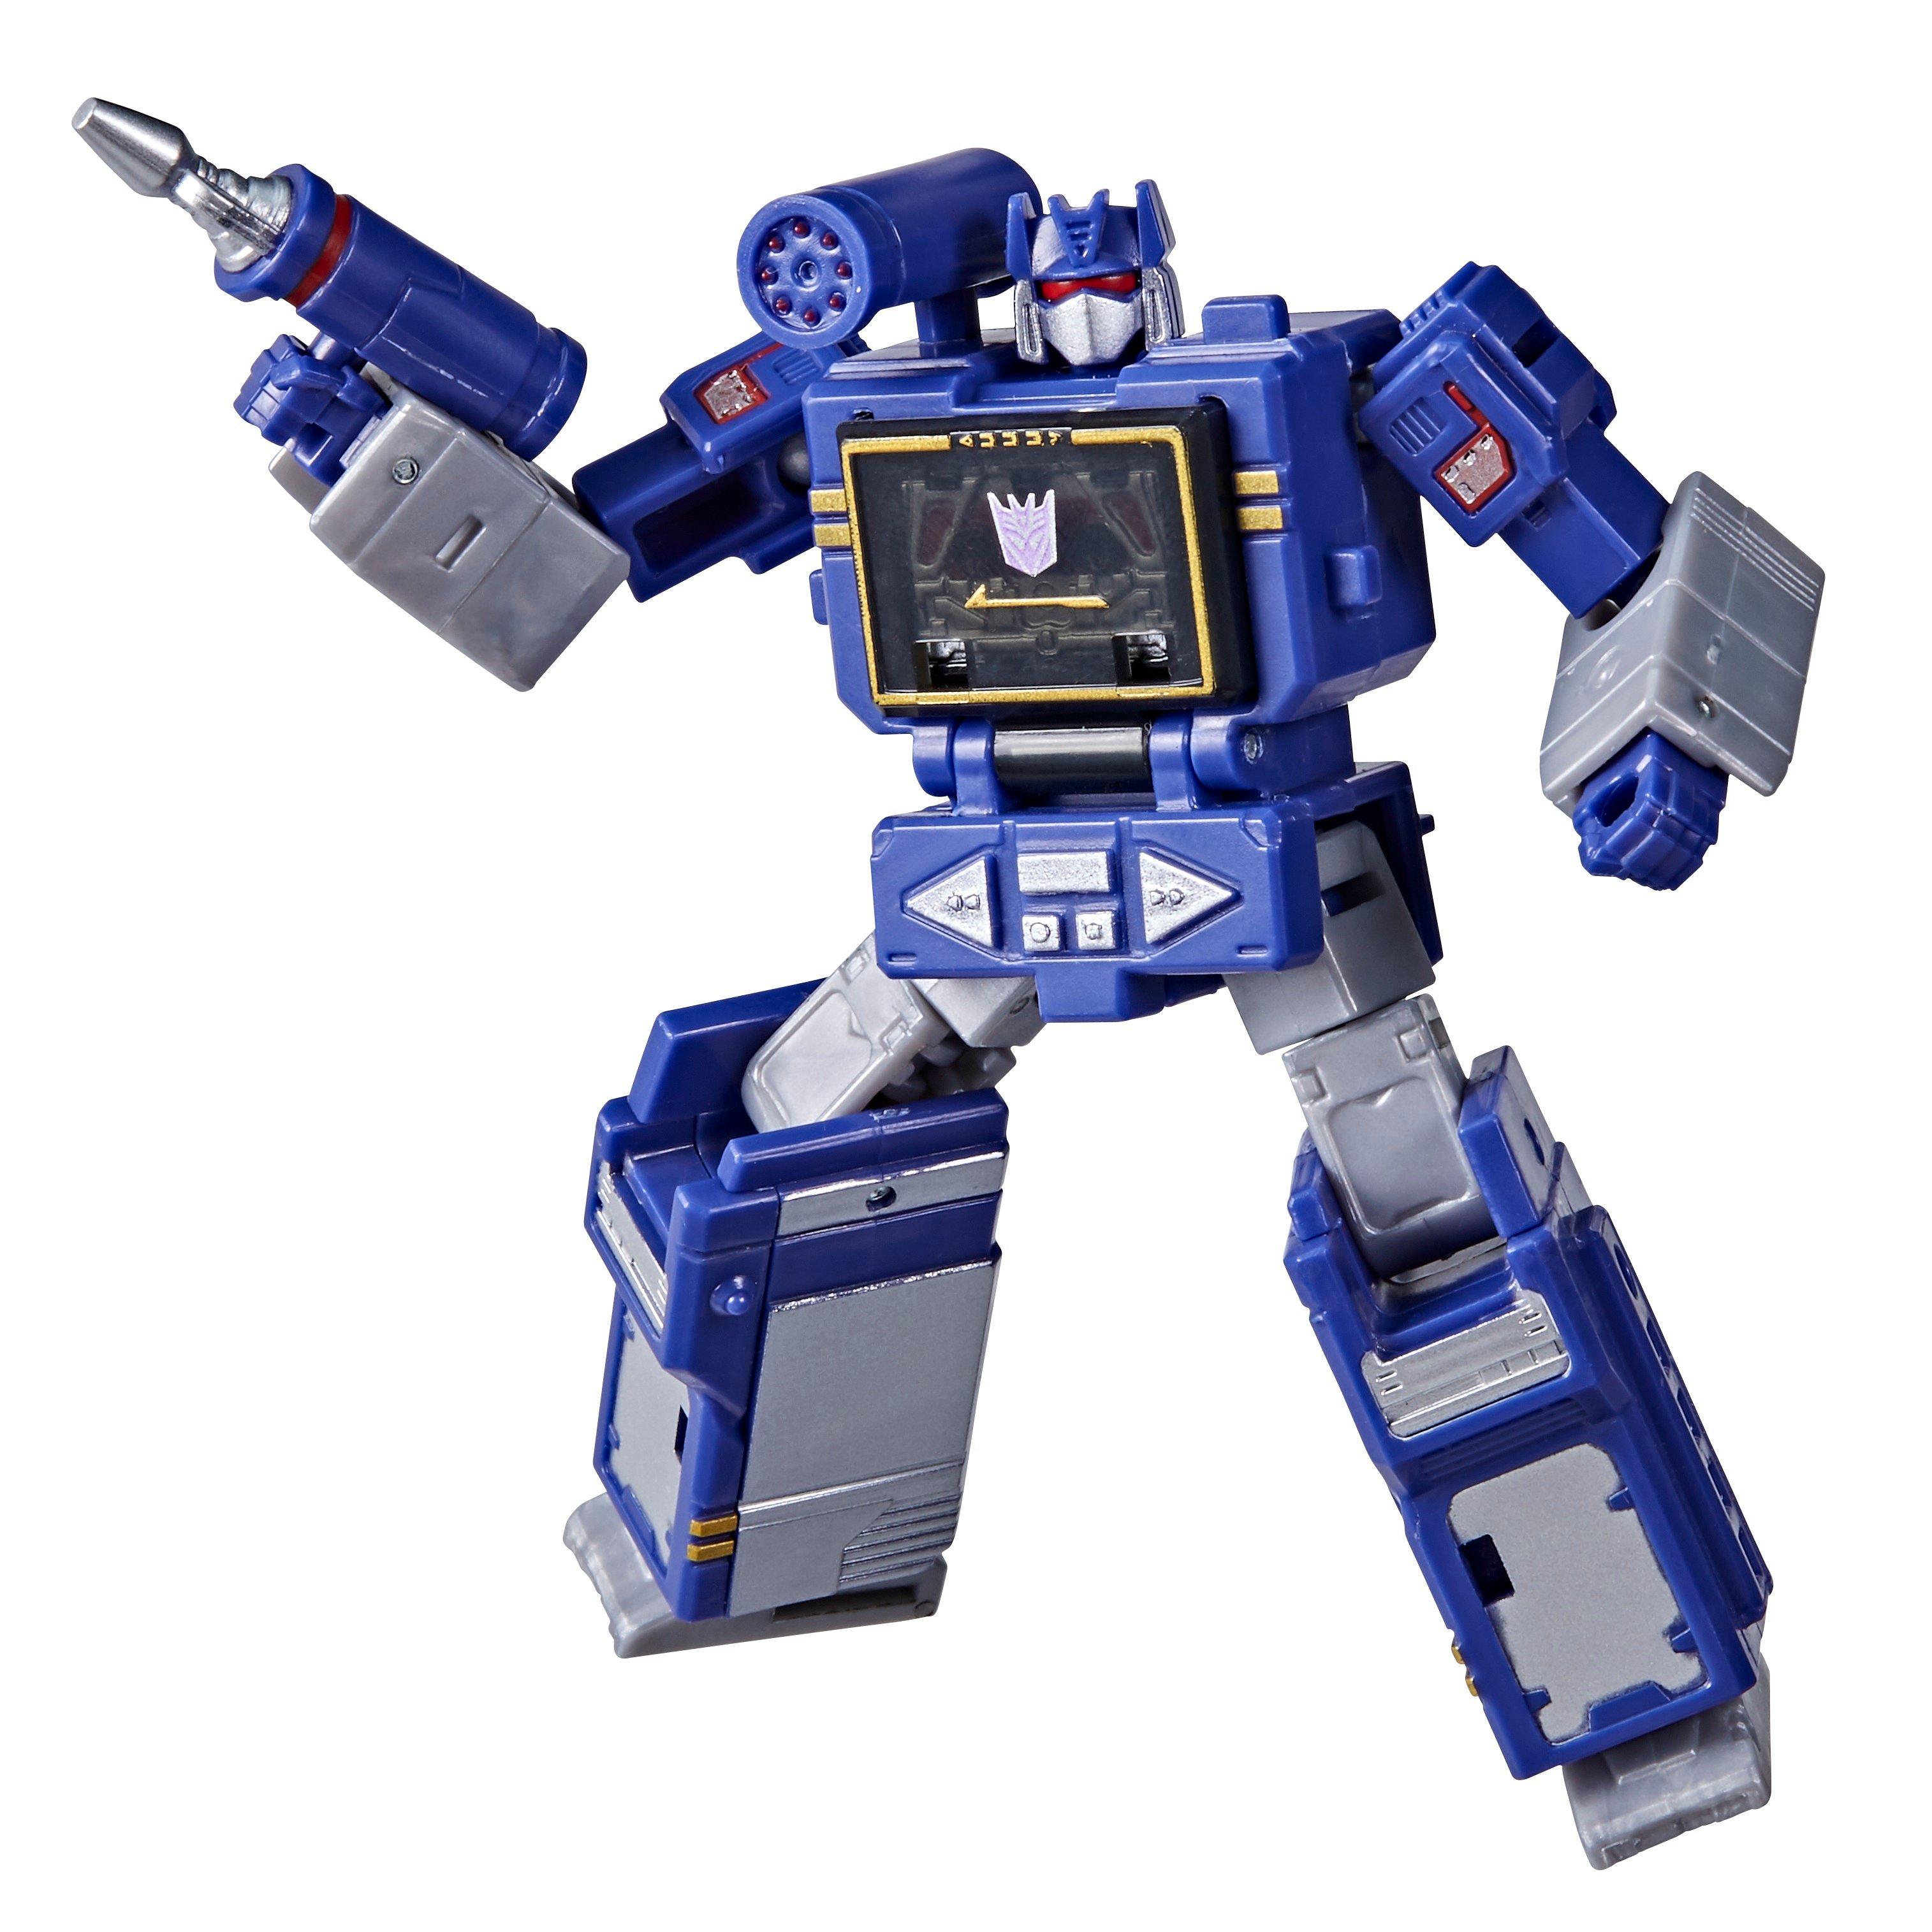 Transformers mini. Игрушка Transformers трансформер-мини Саудвейв f06675l0. Трансформеры Hasbro Soundwave. Трансформеры кингдом Саундвейв. Transformers f2730.